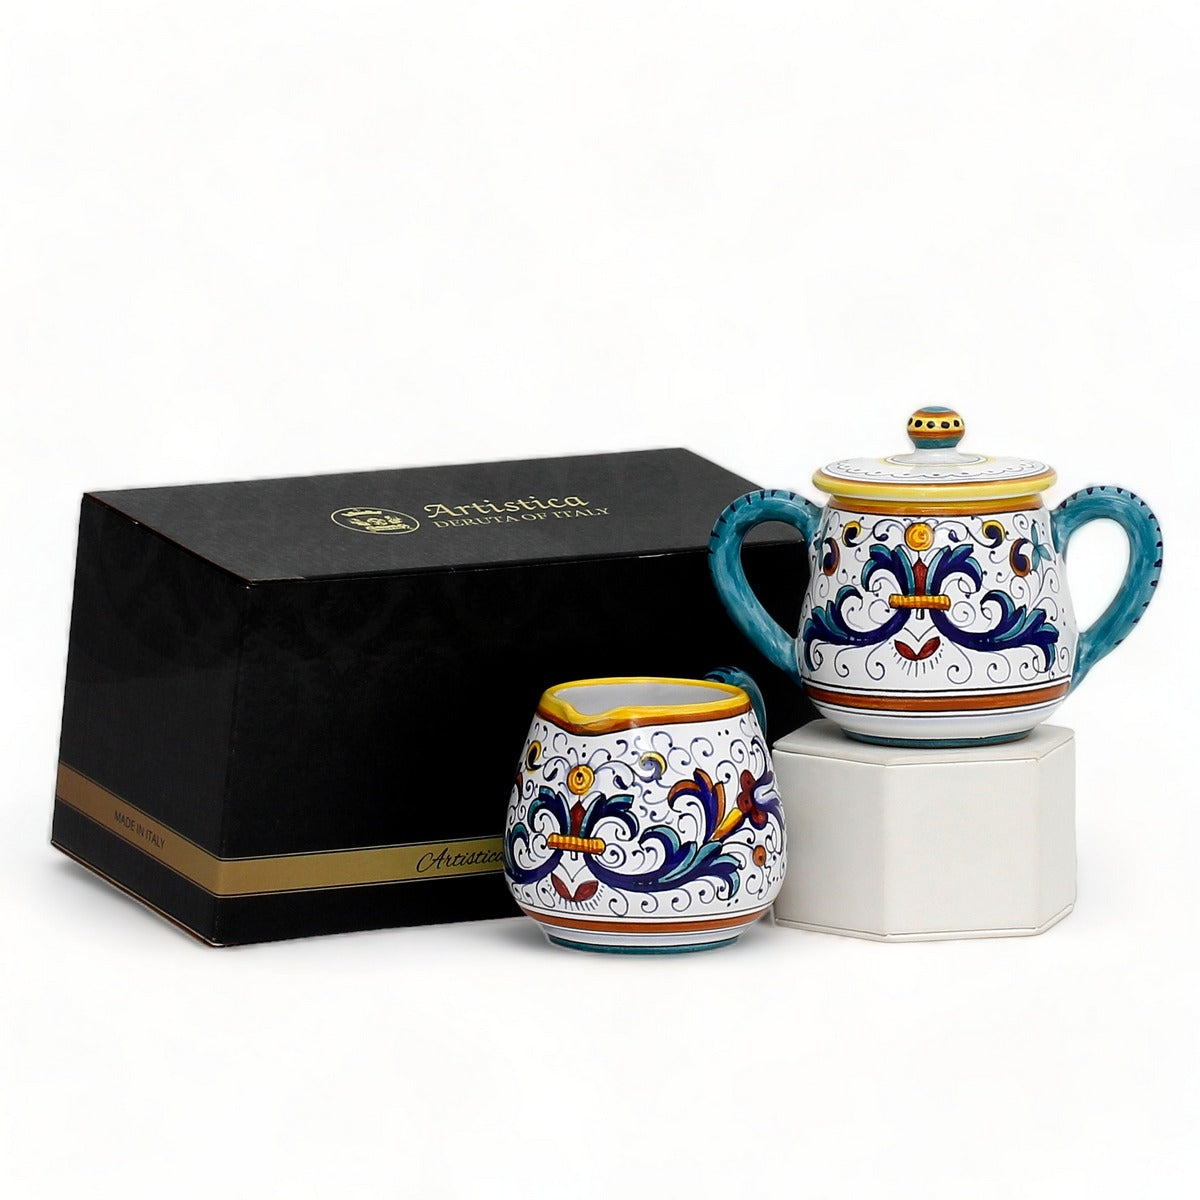 GIFT BOX: With authentic Deruta hand painted ceramic - Cream &amp; Sugar Ricco Deruta Rooster design